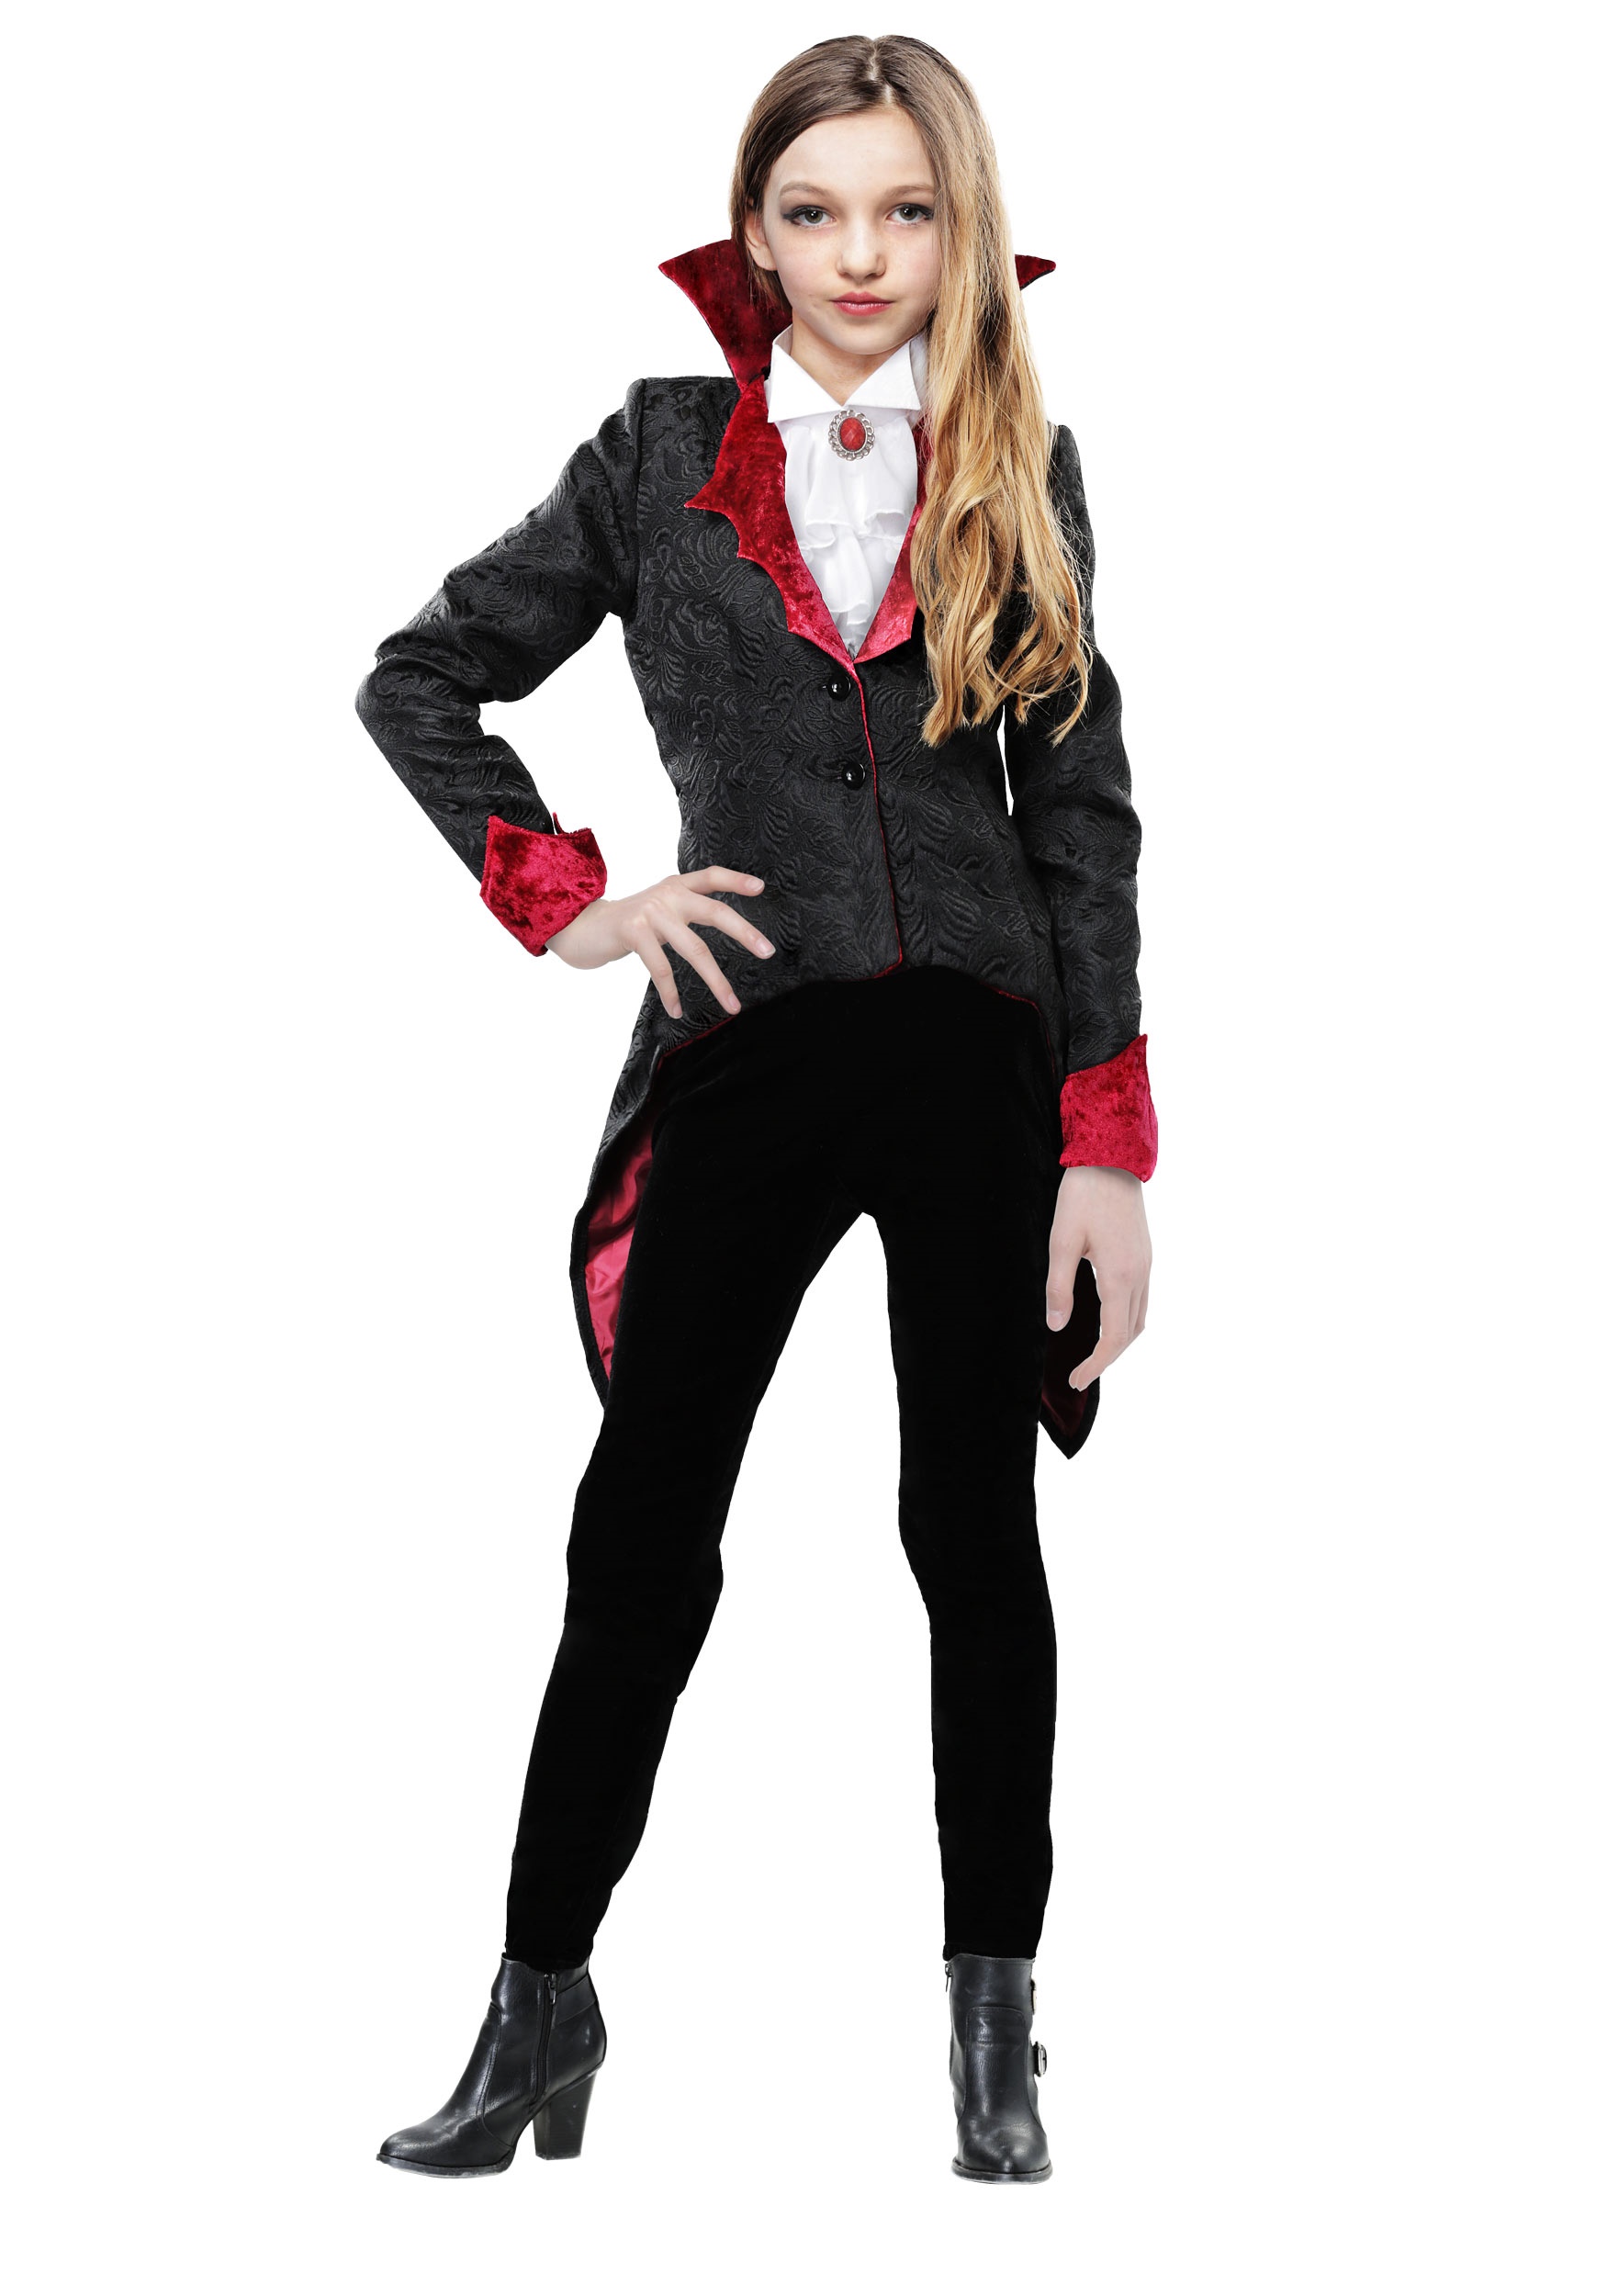 Photos - Fancy Dress FUN Costumes Dashing Girl's Vampiress Costume Black/Red/White